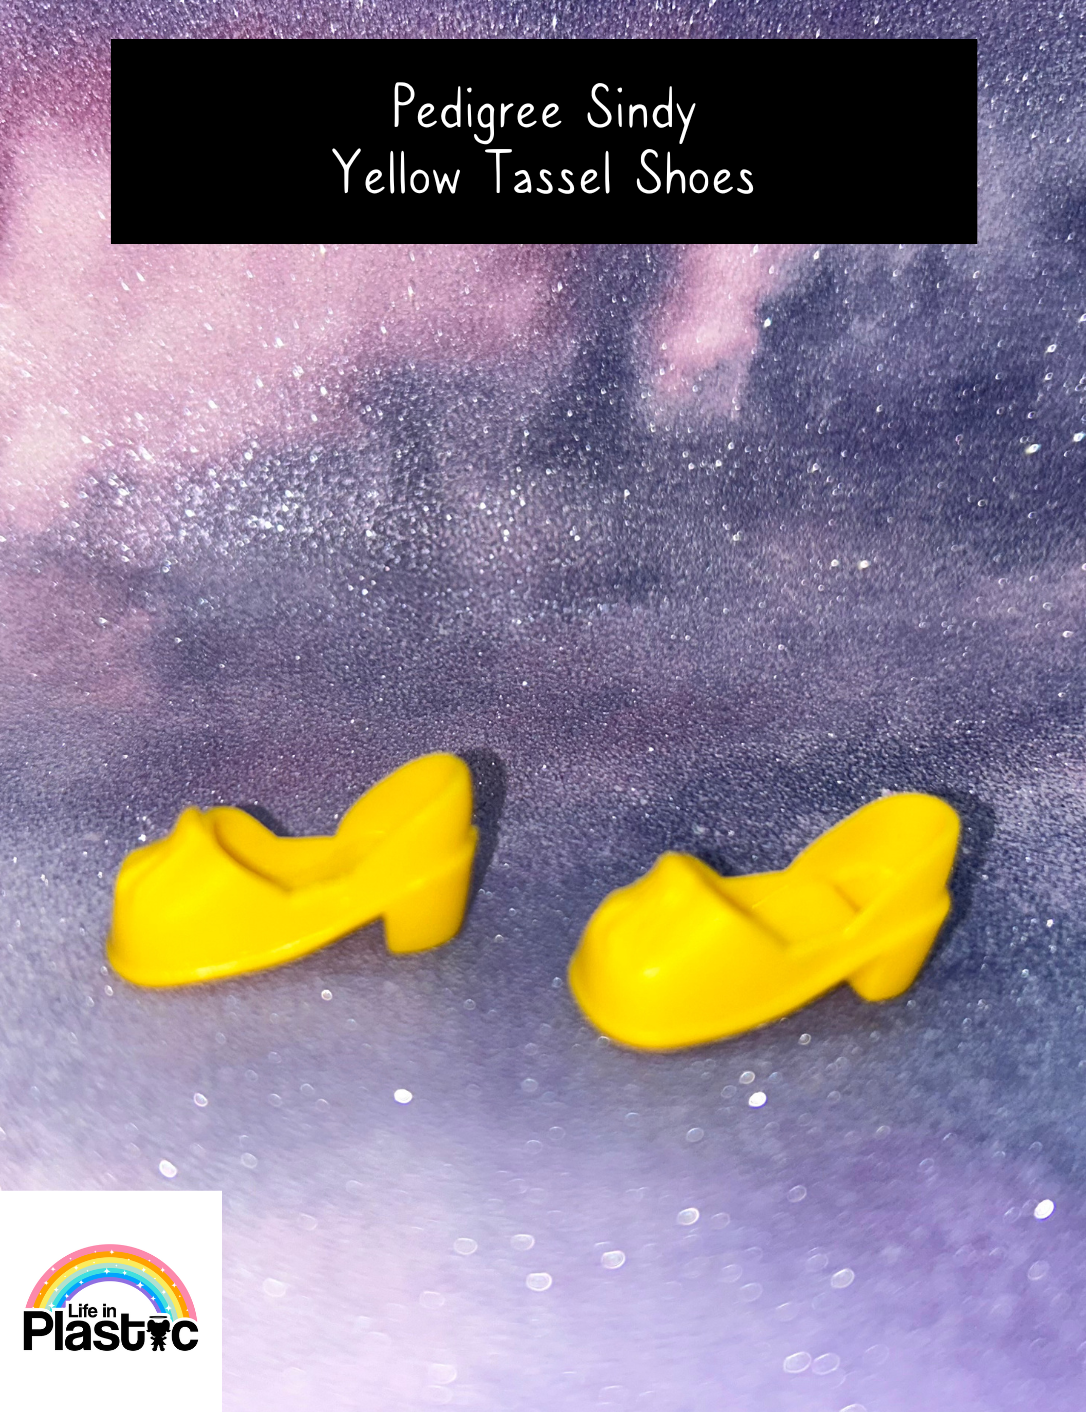 Pedigree Sindy Yellow Tassel Shoes